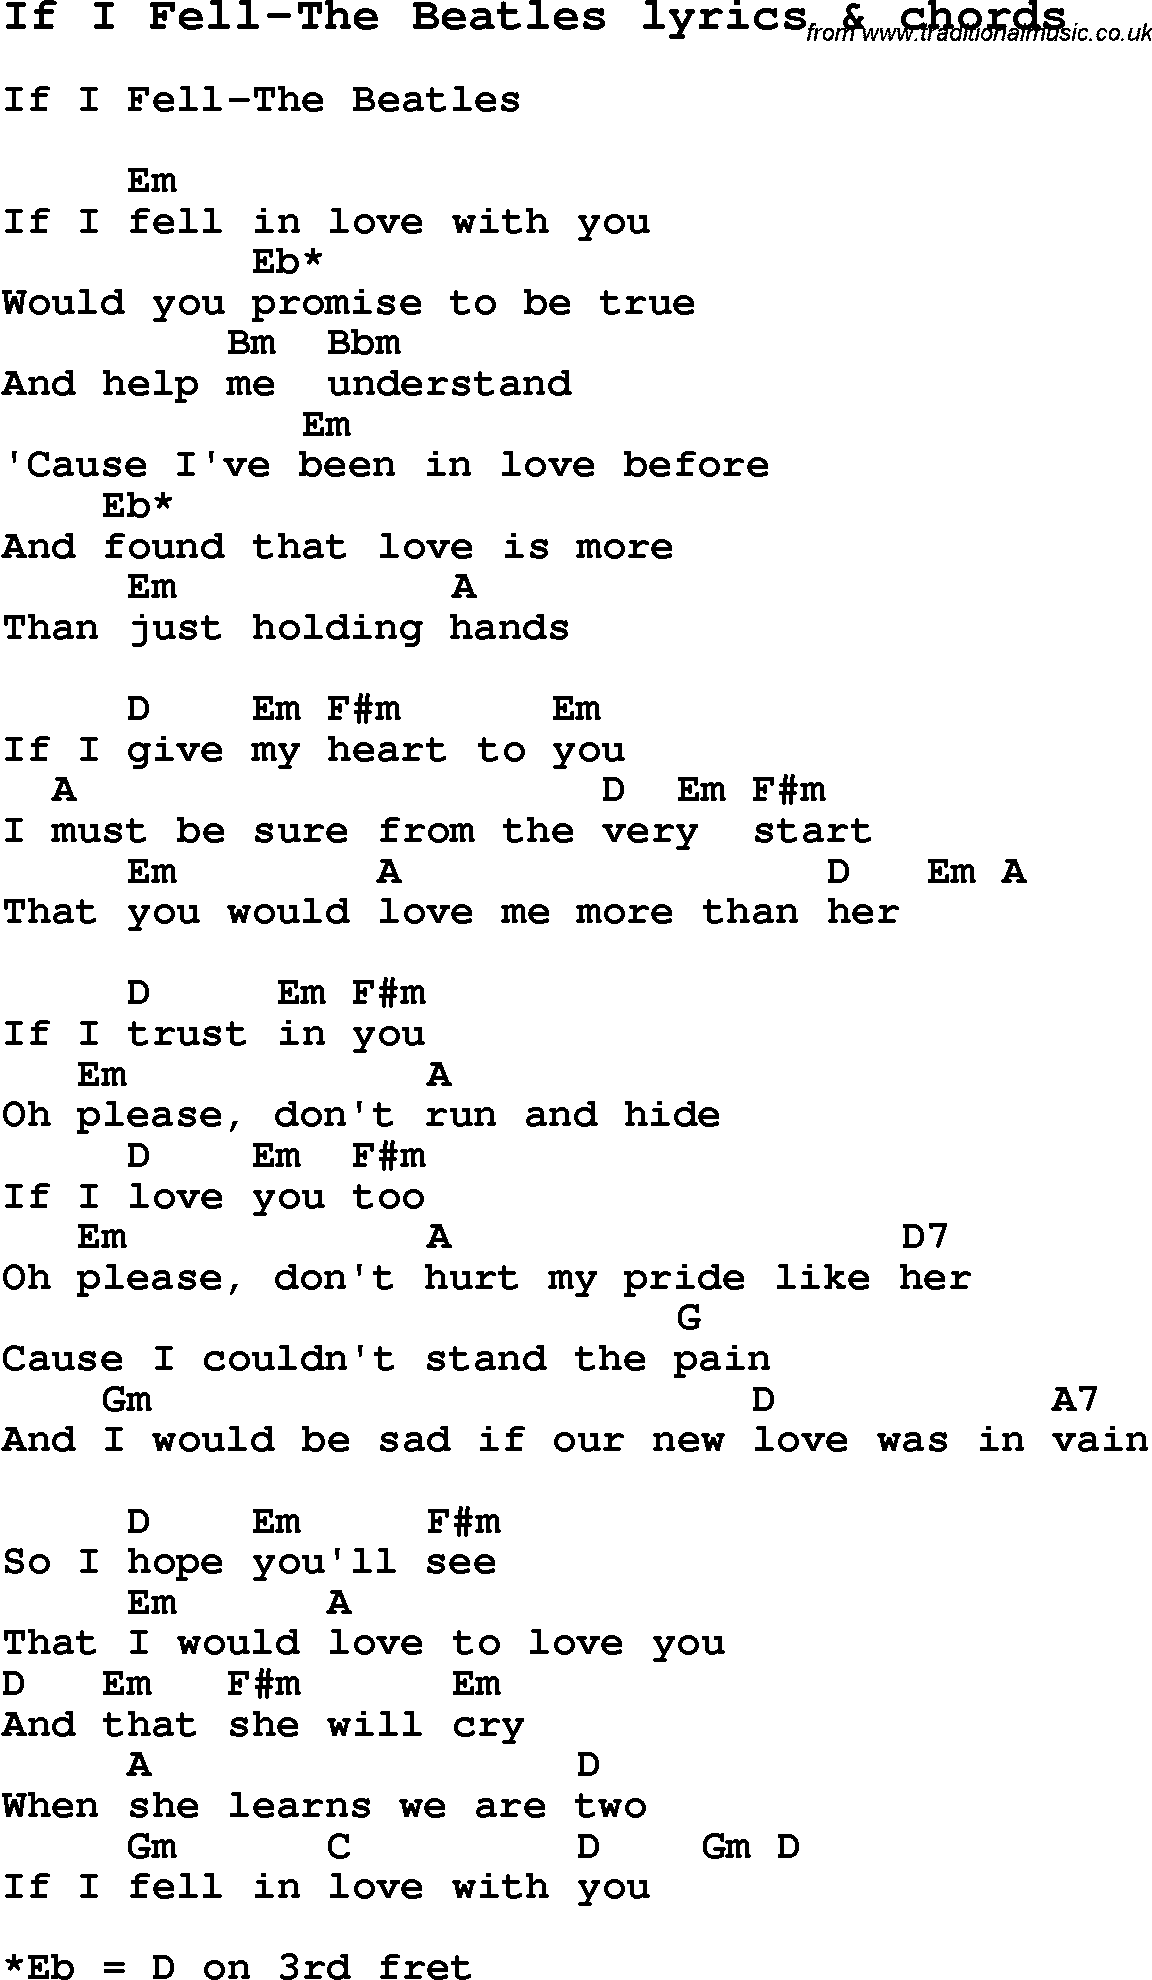 Love Song Lyrics for: If I Fell-The Beatles with chords for Ukulele, Guitar Banjo etc.